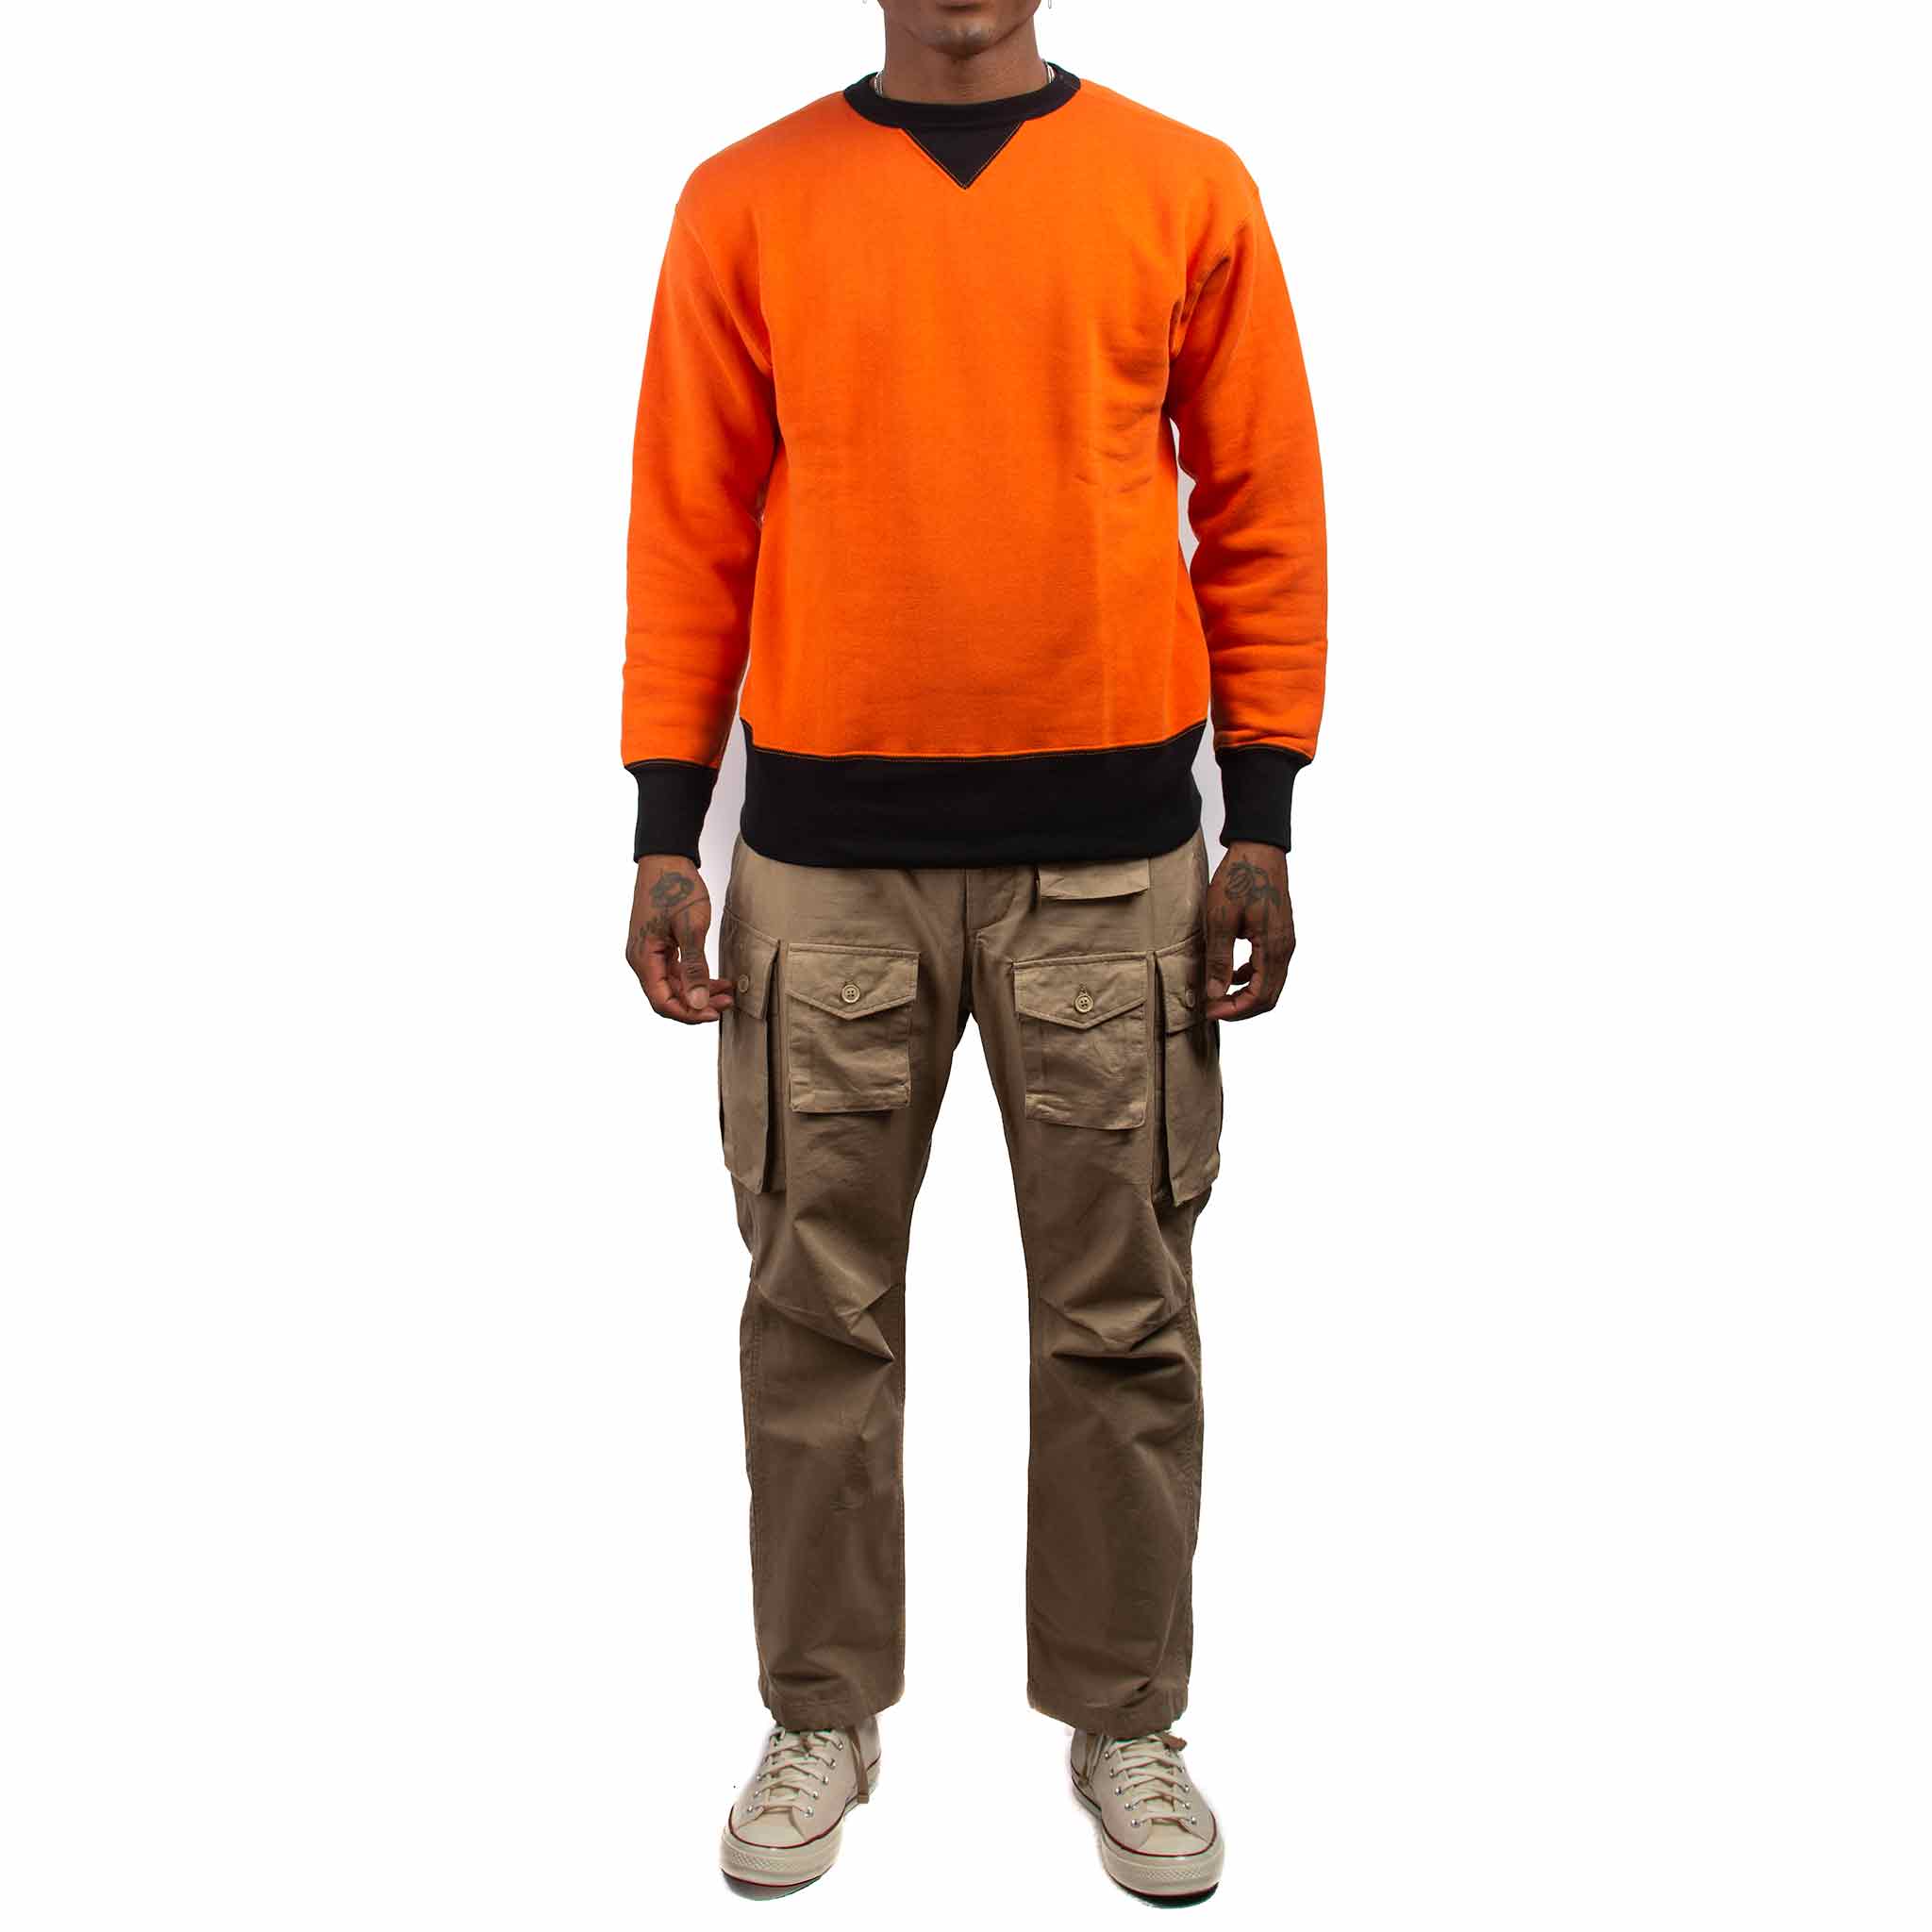 The Real McCoy's MC19112 Two-Tone Crewneck Sweatshirt Orange/Black Model